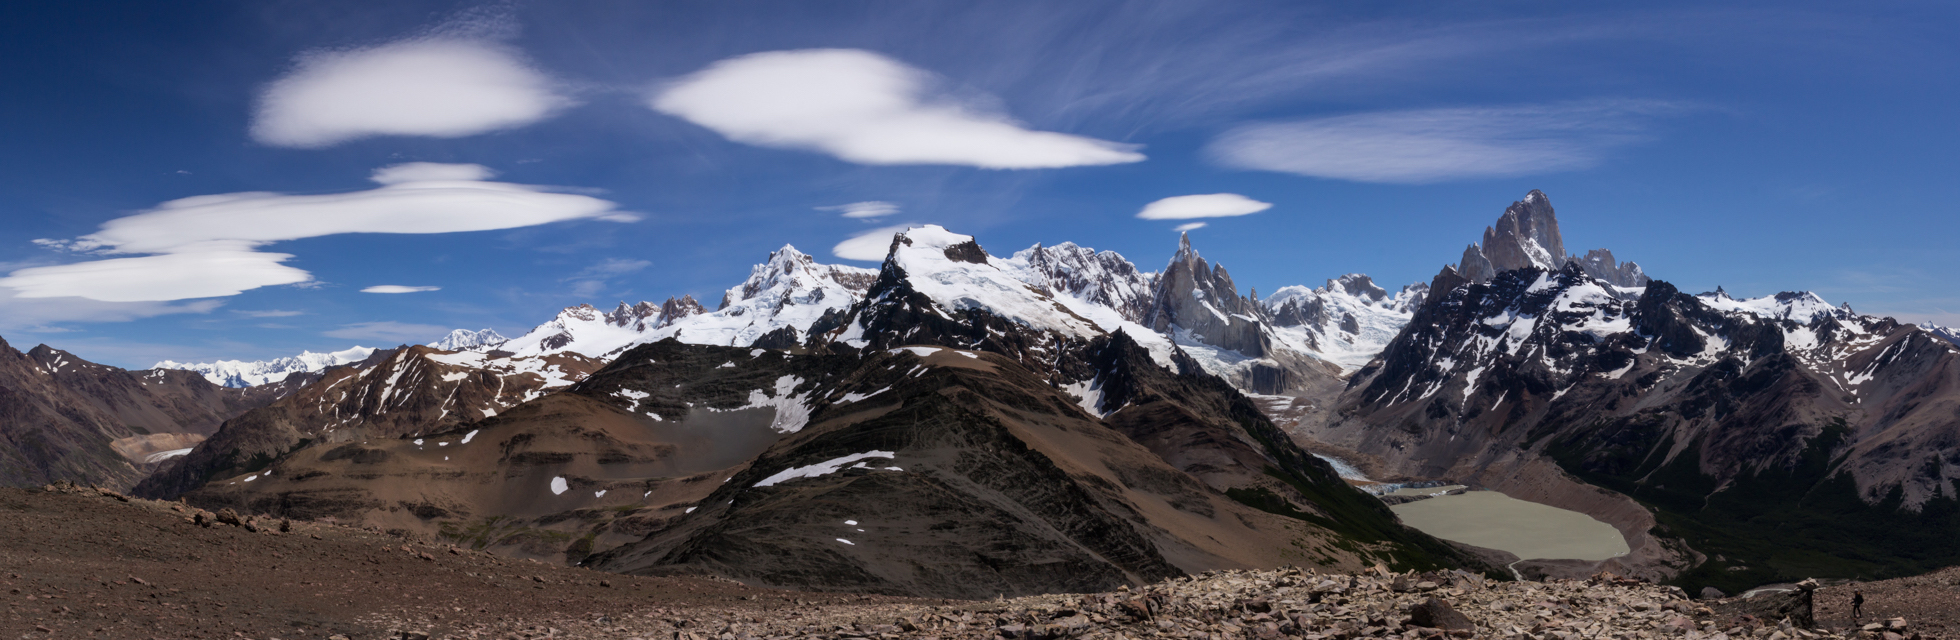 chalten massif southern patagonia fitzroy cerro torre